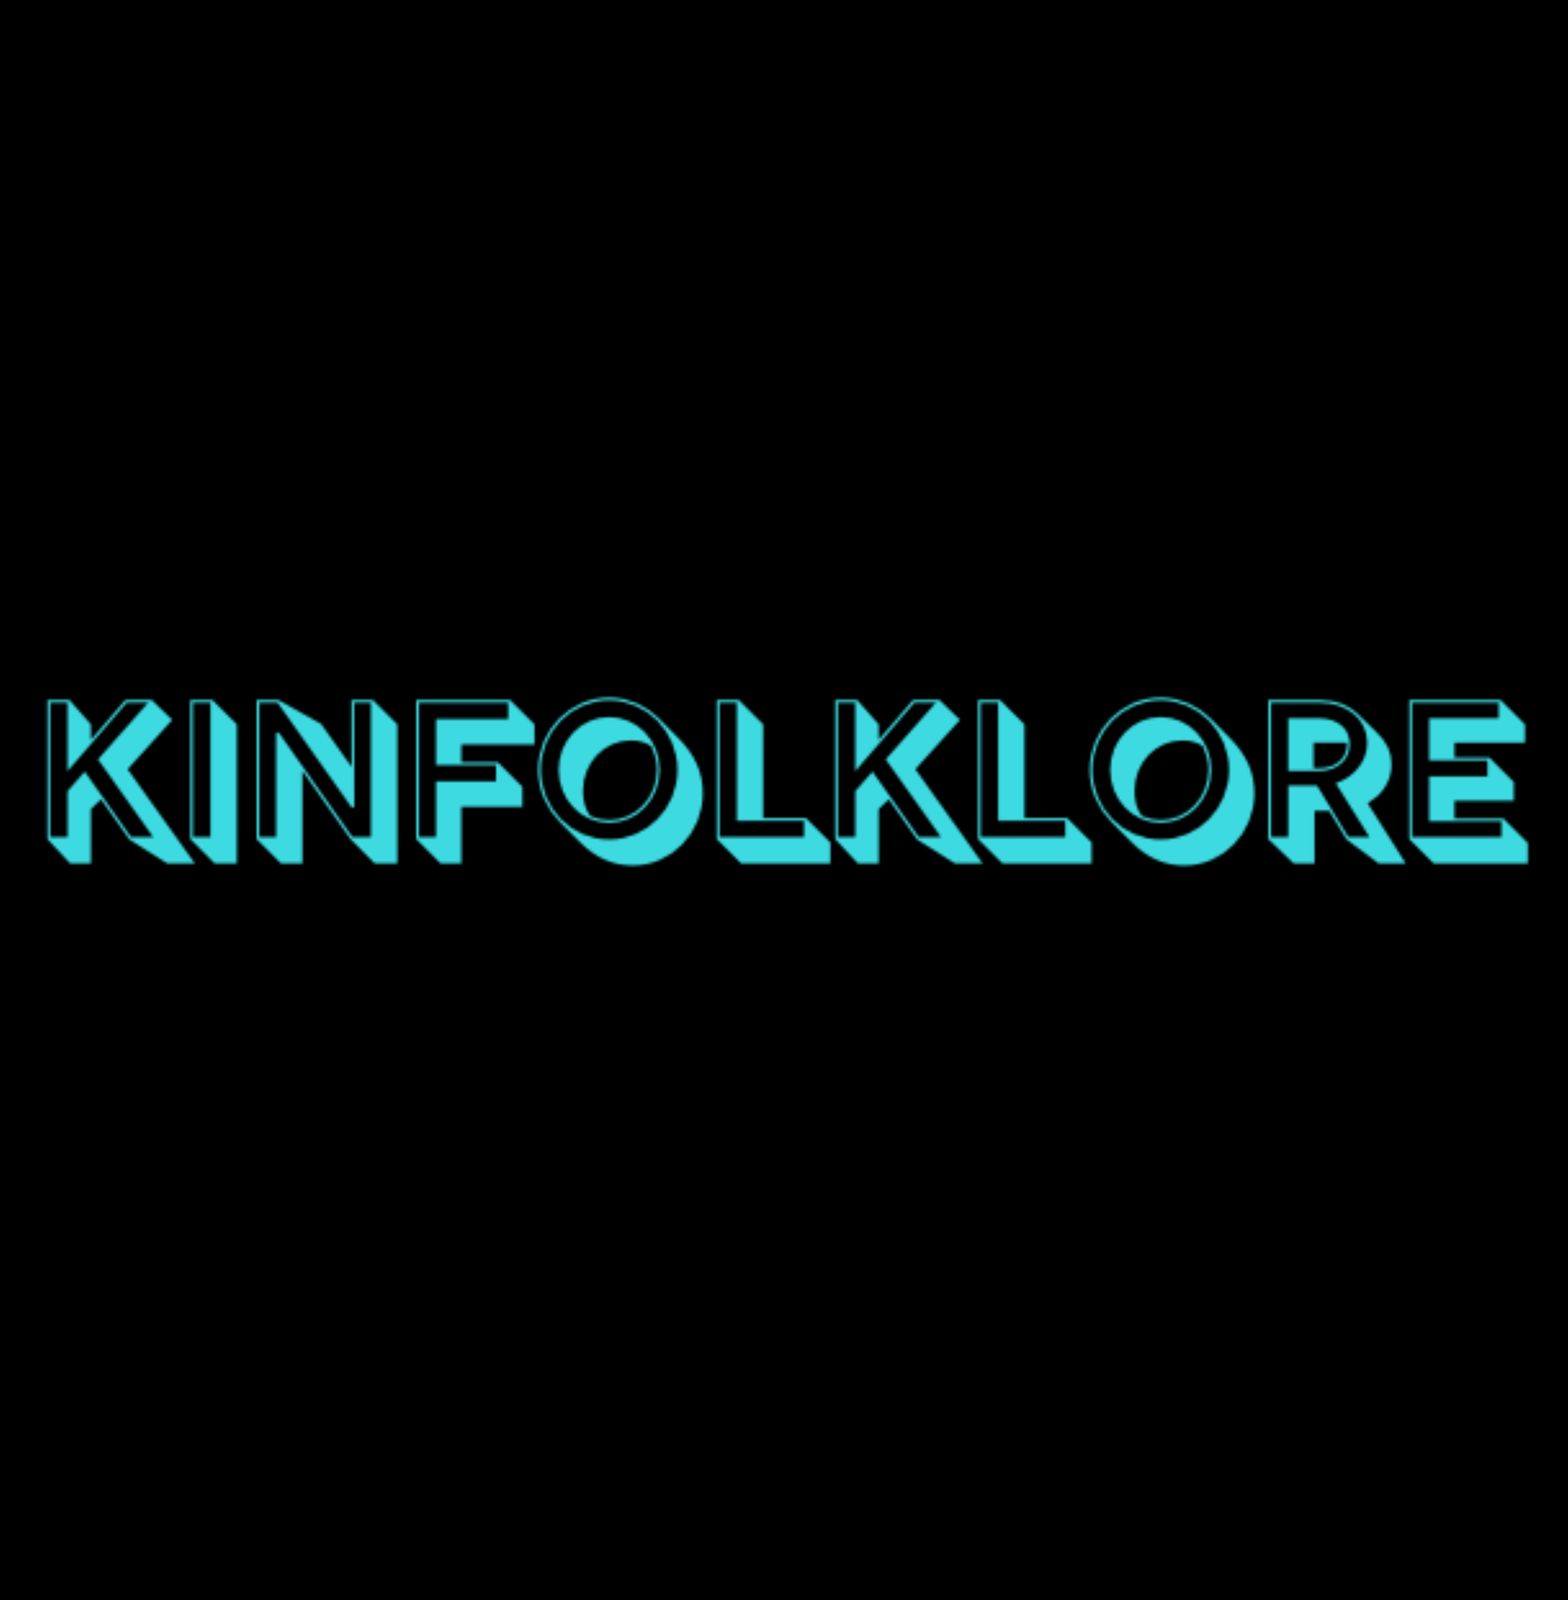 Kinfolklore: Anniversary Episode (When Worlds Collide)